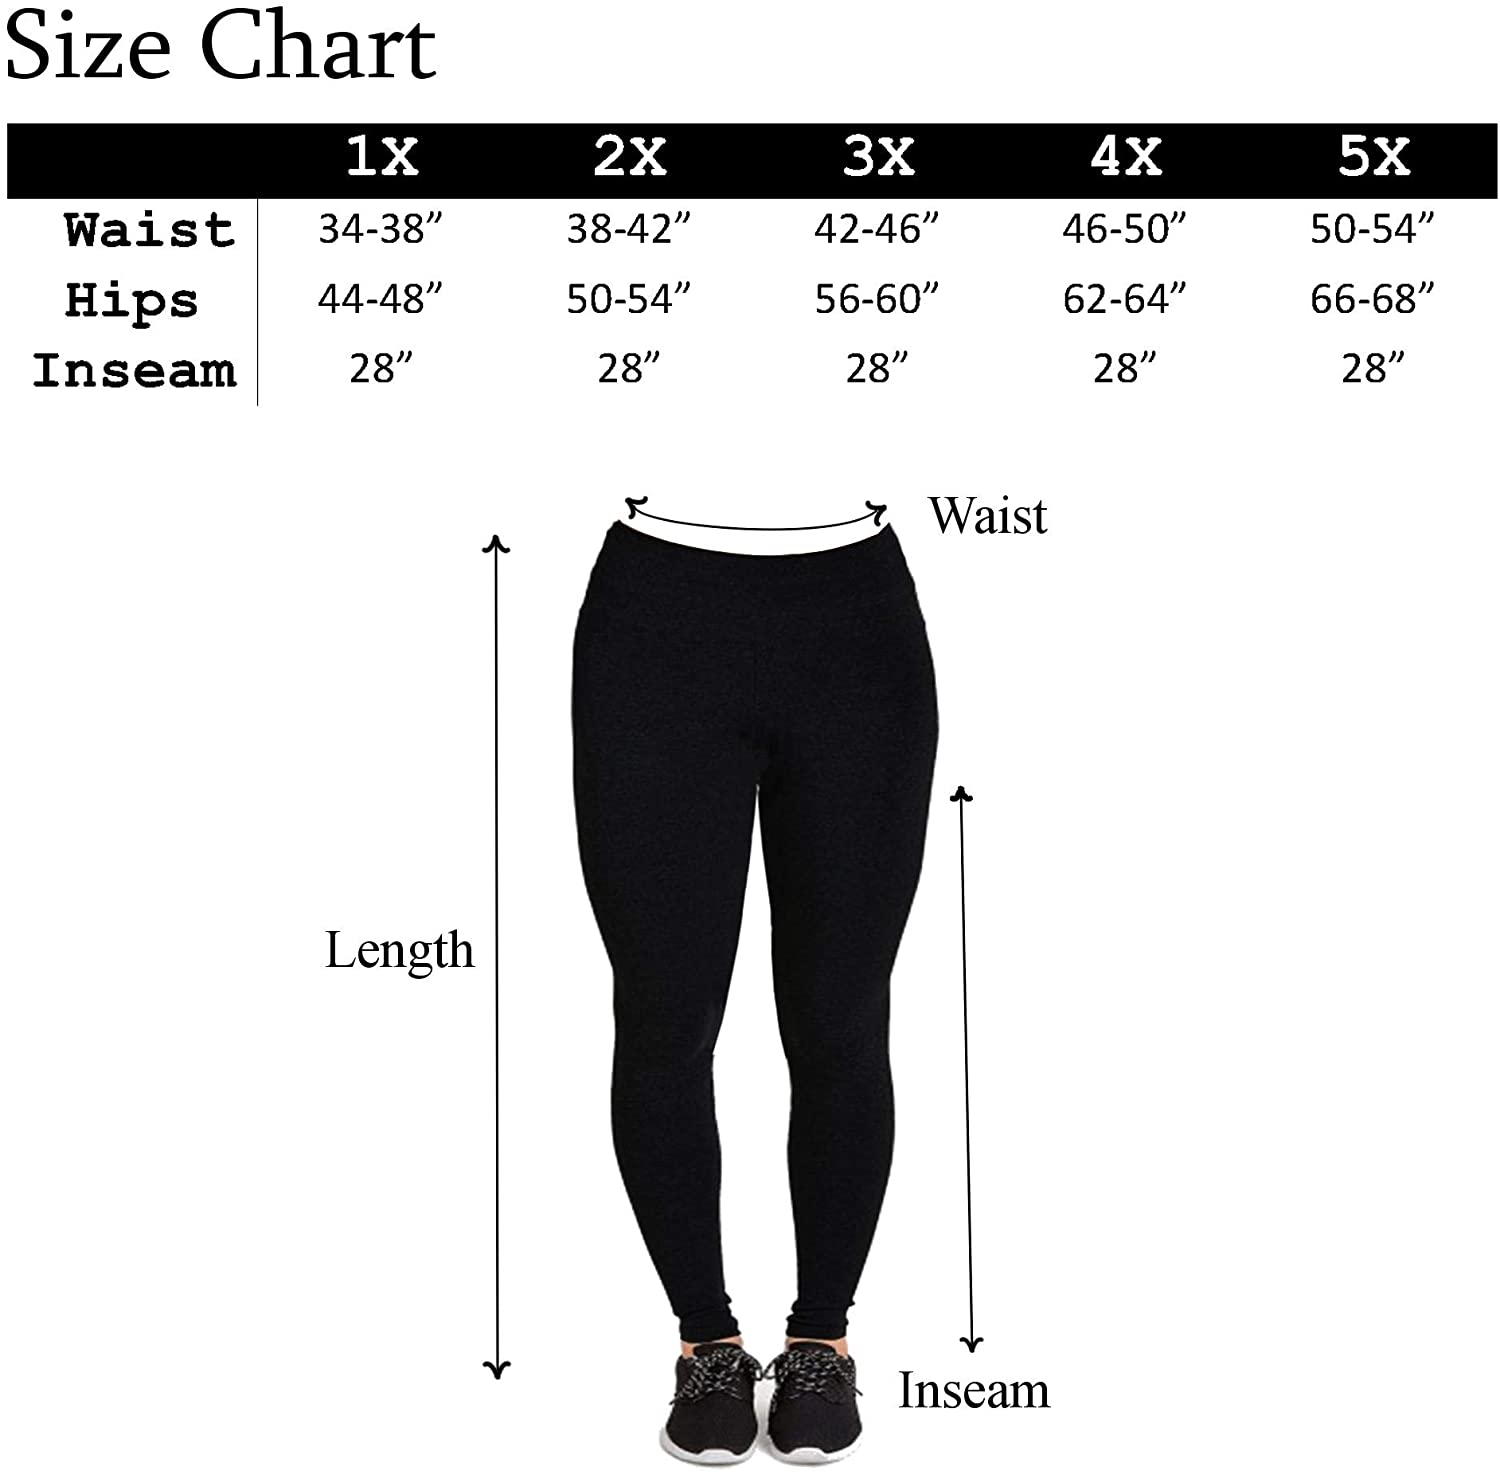 Women's Plus Size Cotton Solid Full Length Leggings (1X to 5X) | eBay